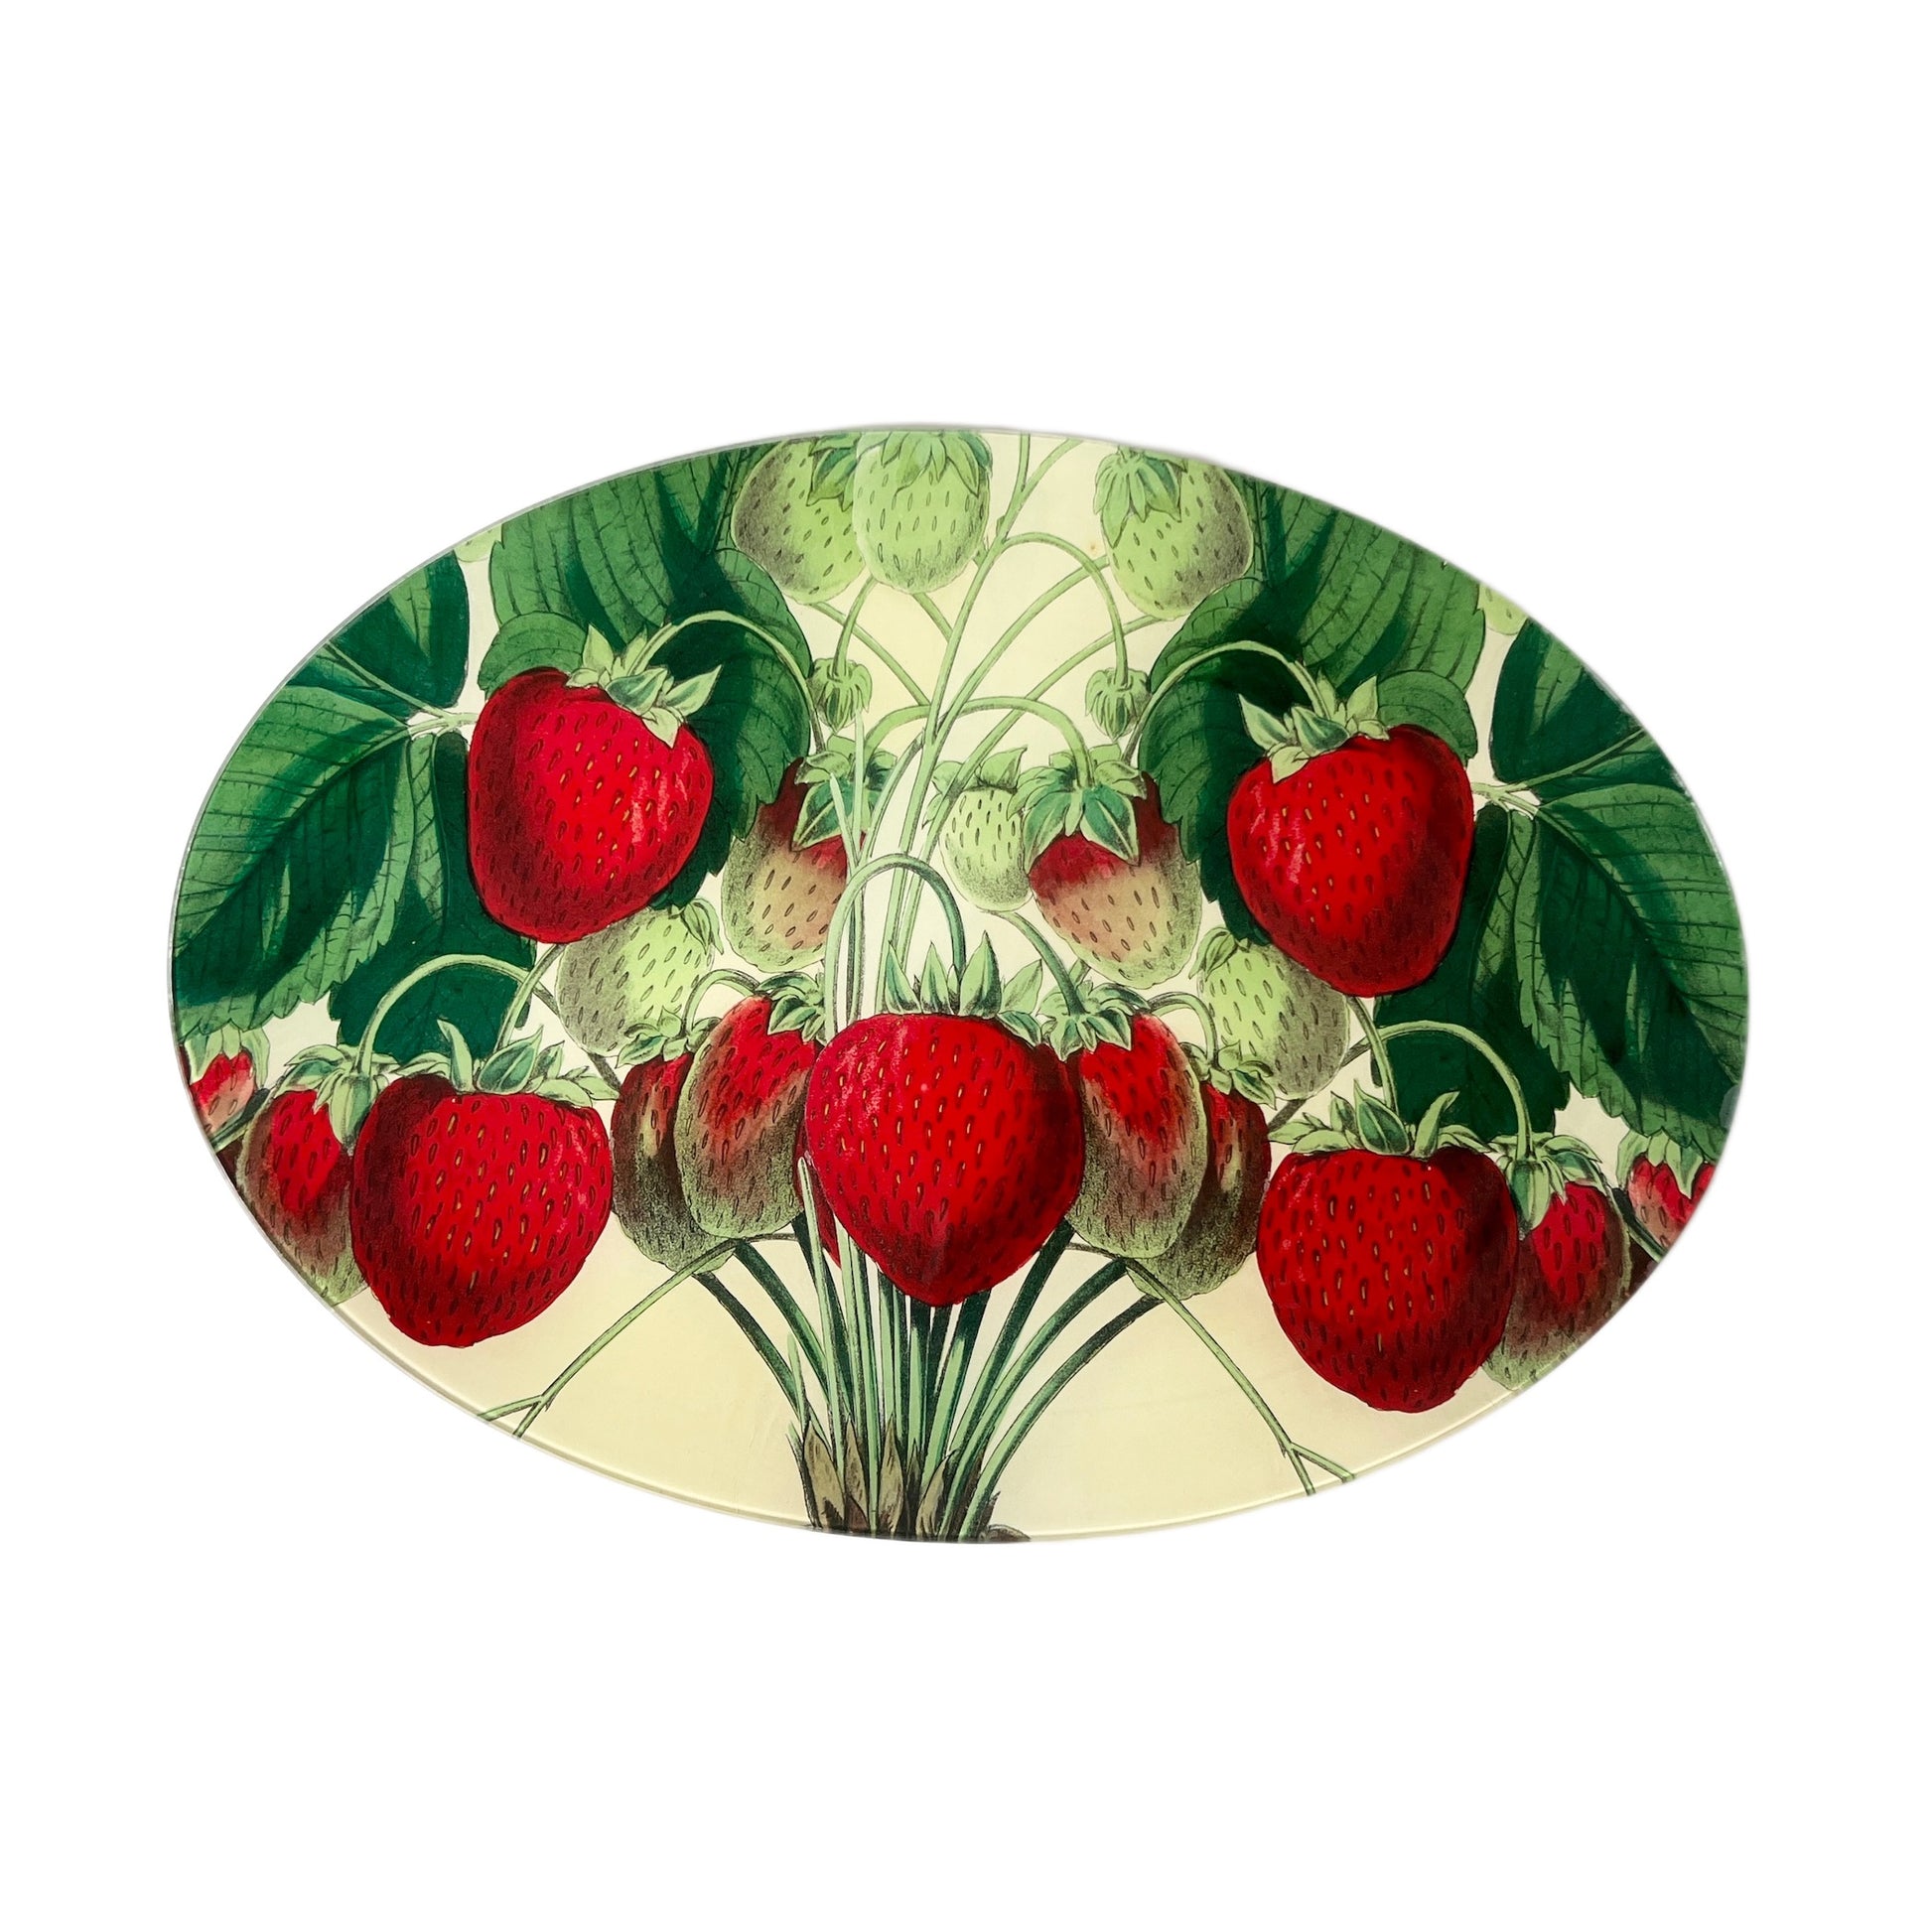 【JOHN DERIAN】デコパージュプレート Strawberries